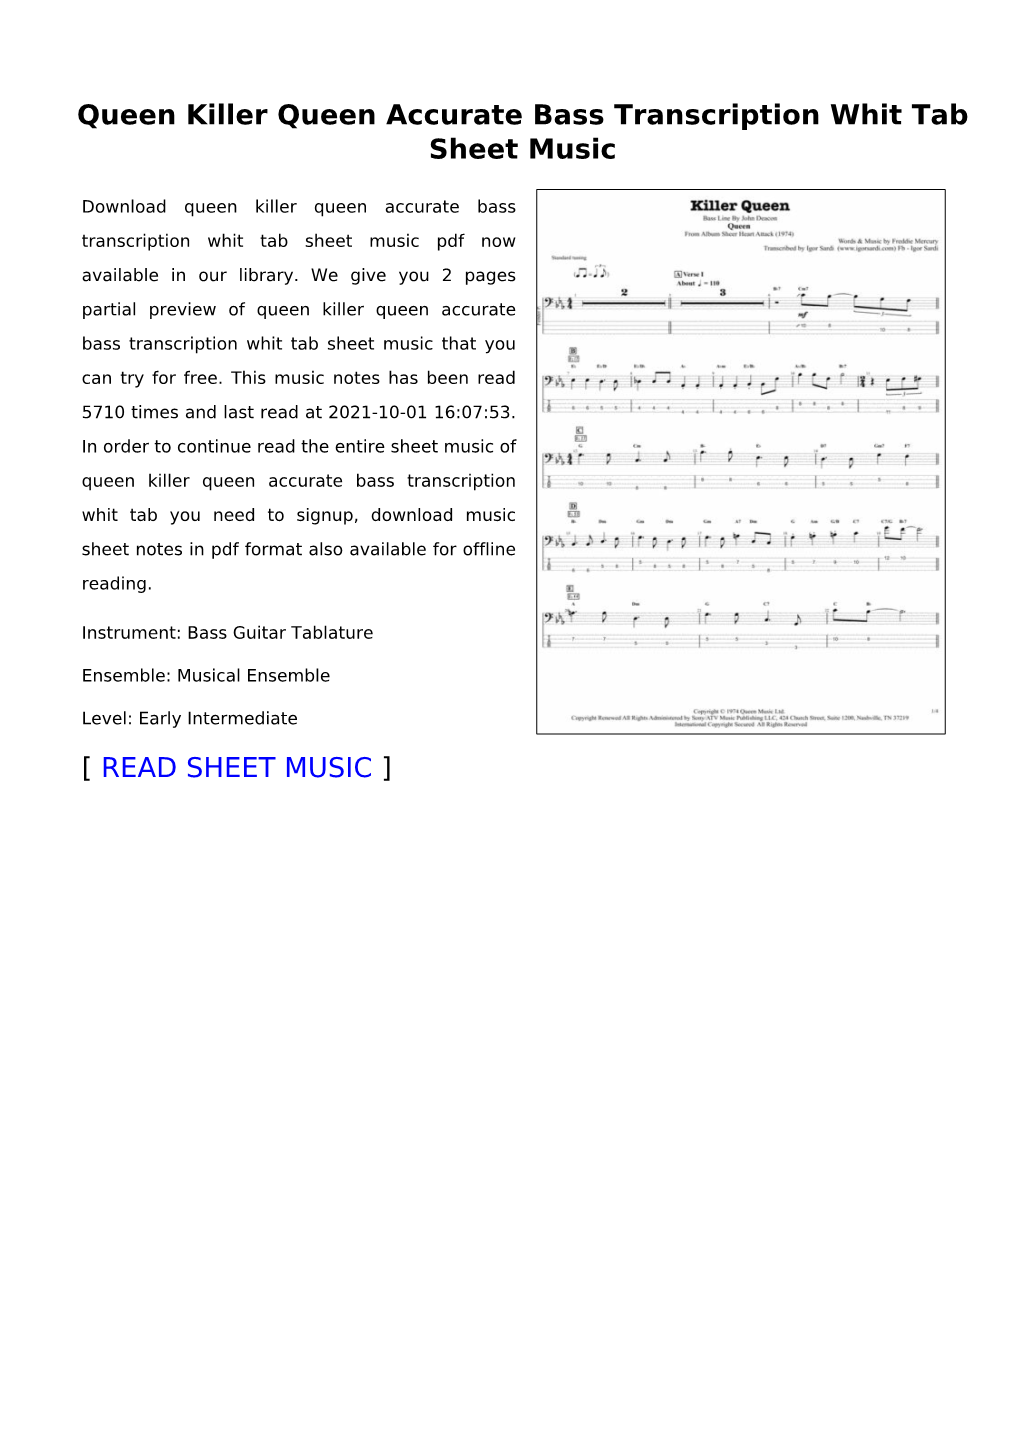 Queen Killer Queen Accurate Bass Transcription Whit Tab Sheet Music